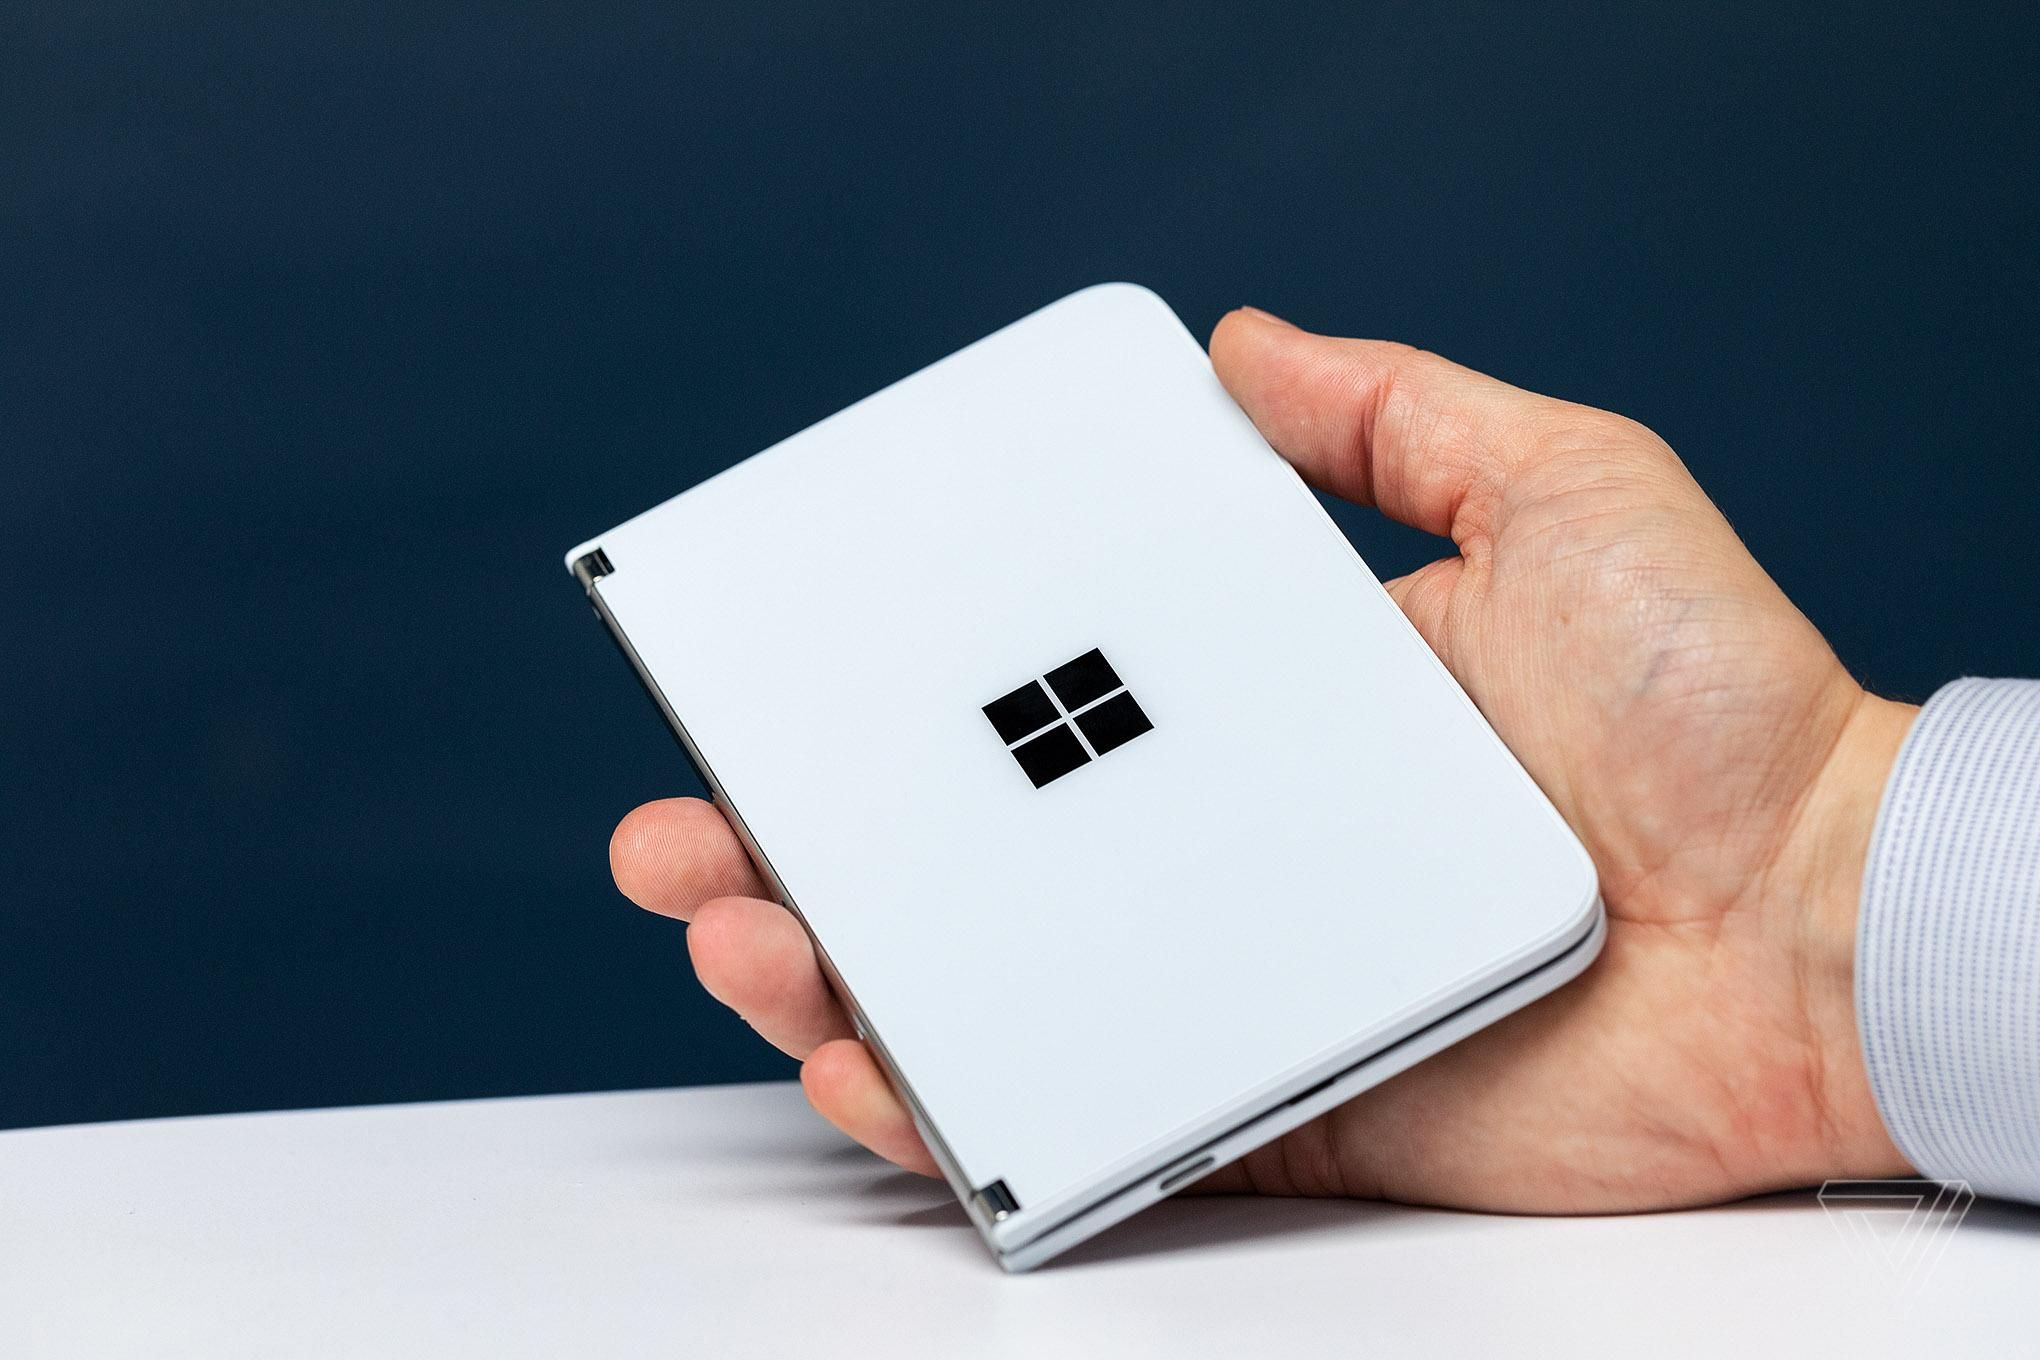 Топ-менеджер Microsoft намекнул на скорый релиз складного смартфона Surface Duo